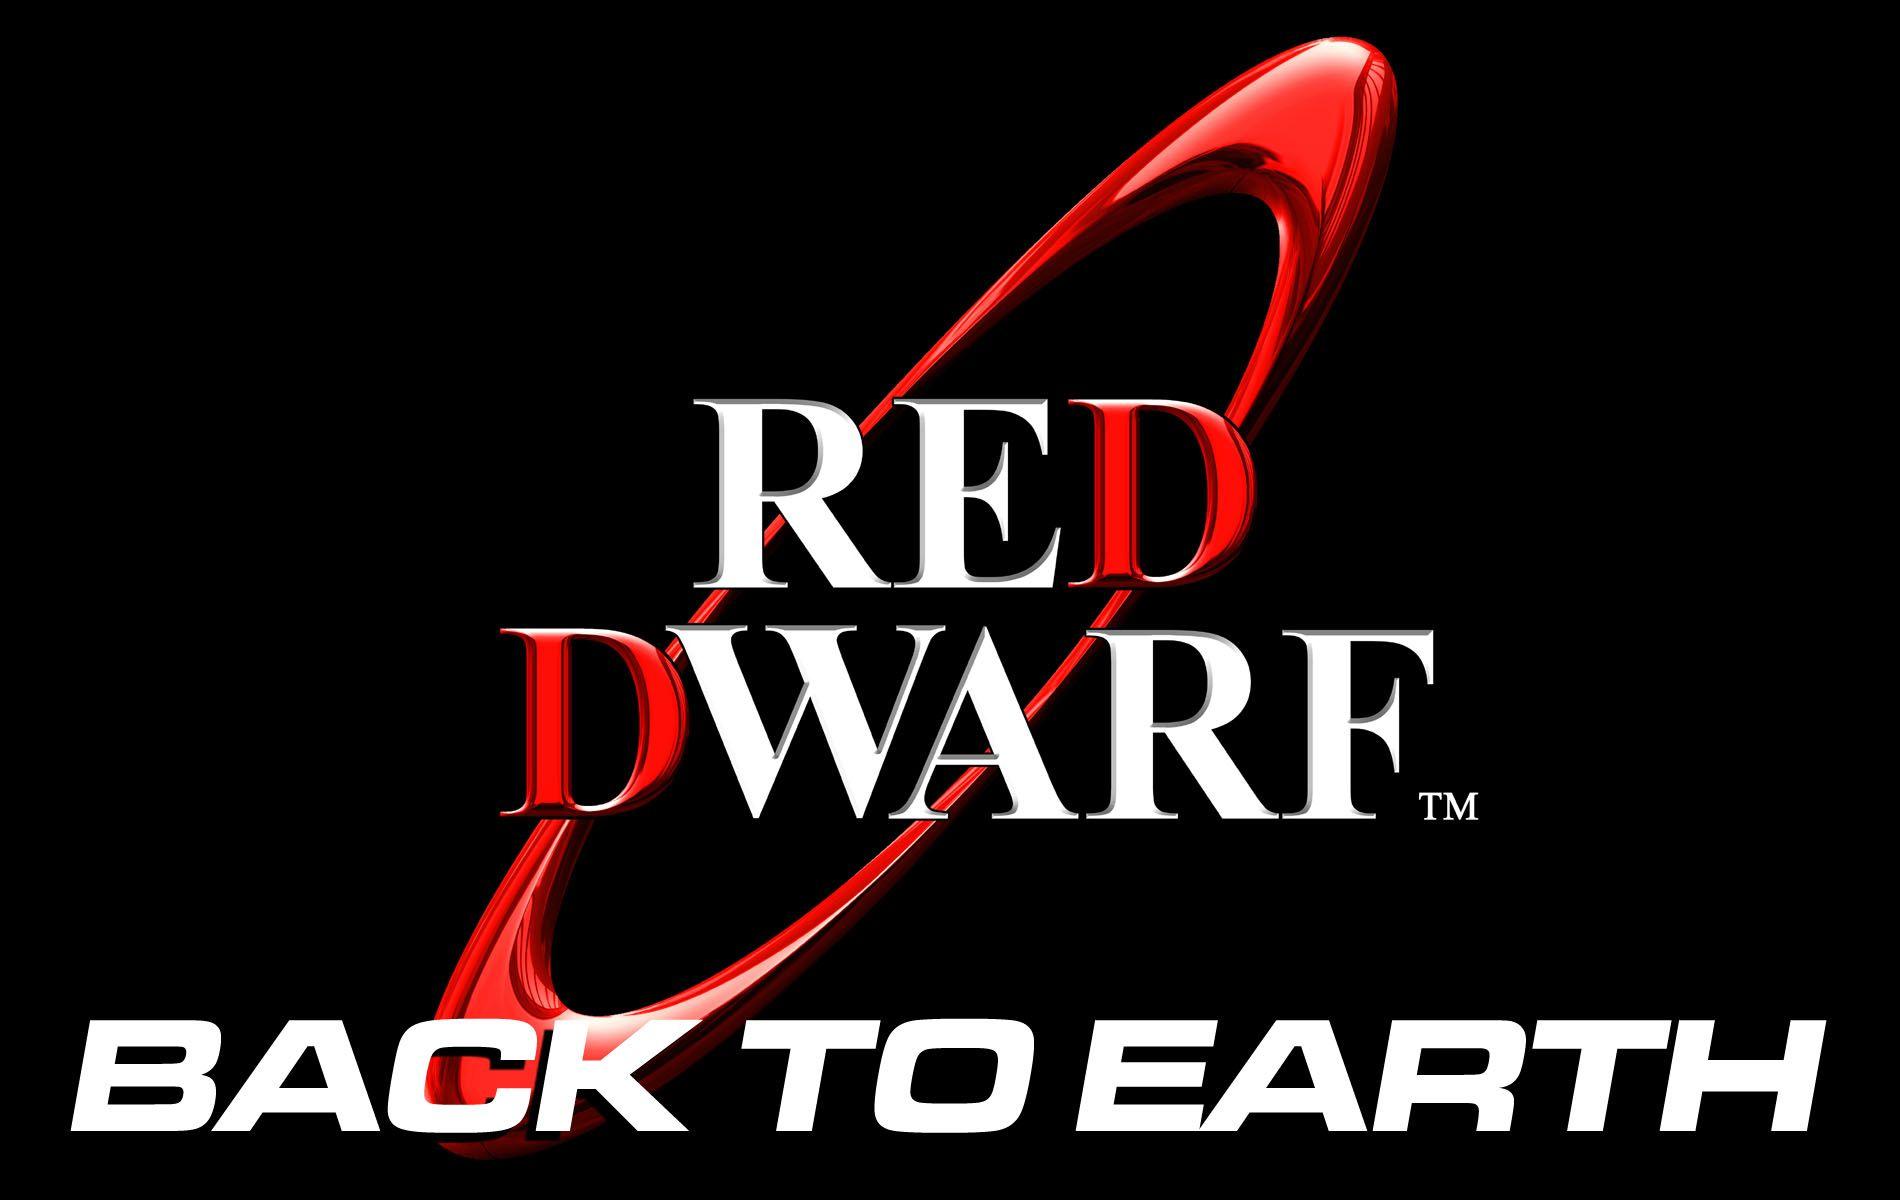 Red Dwarf Logo - Downloads. Red Dwarf Official Website